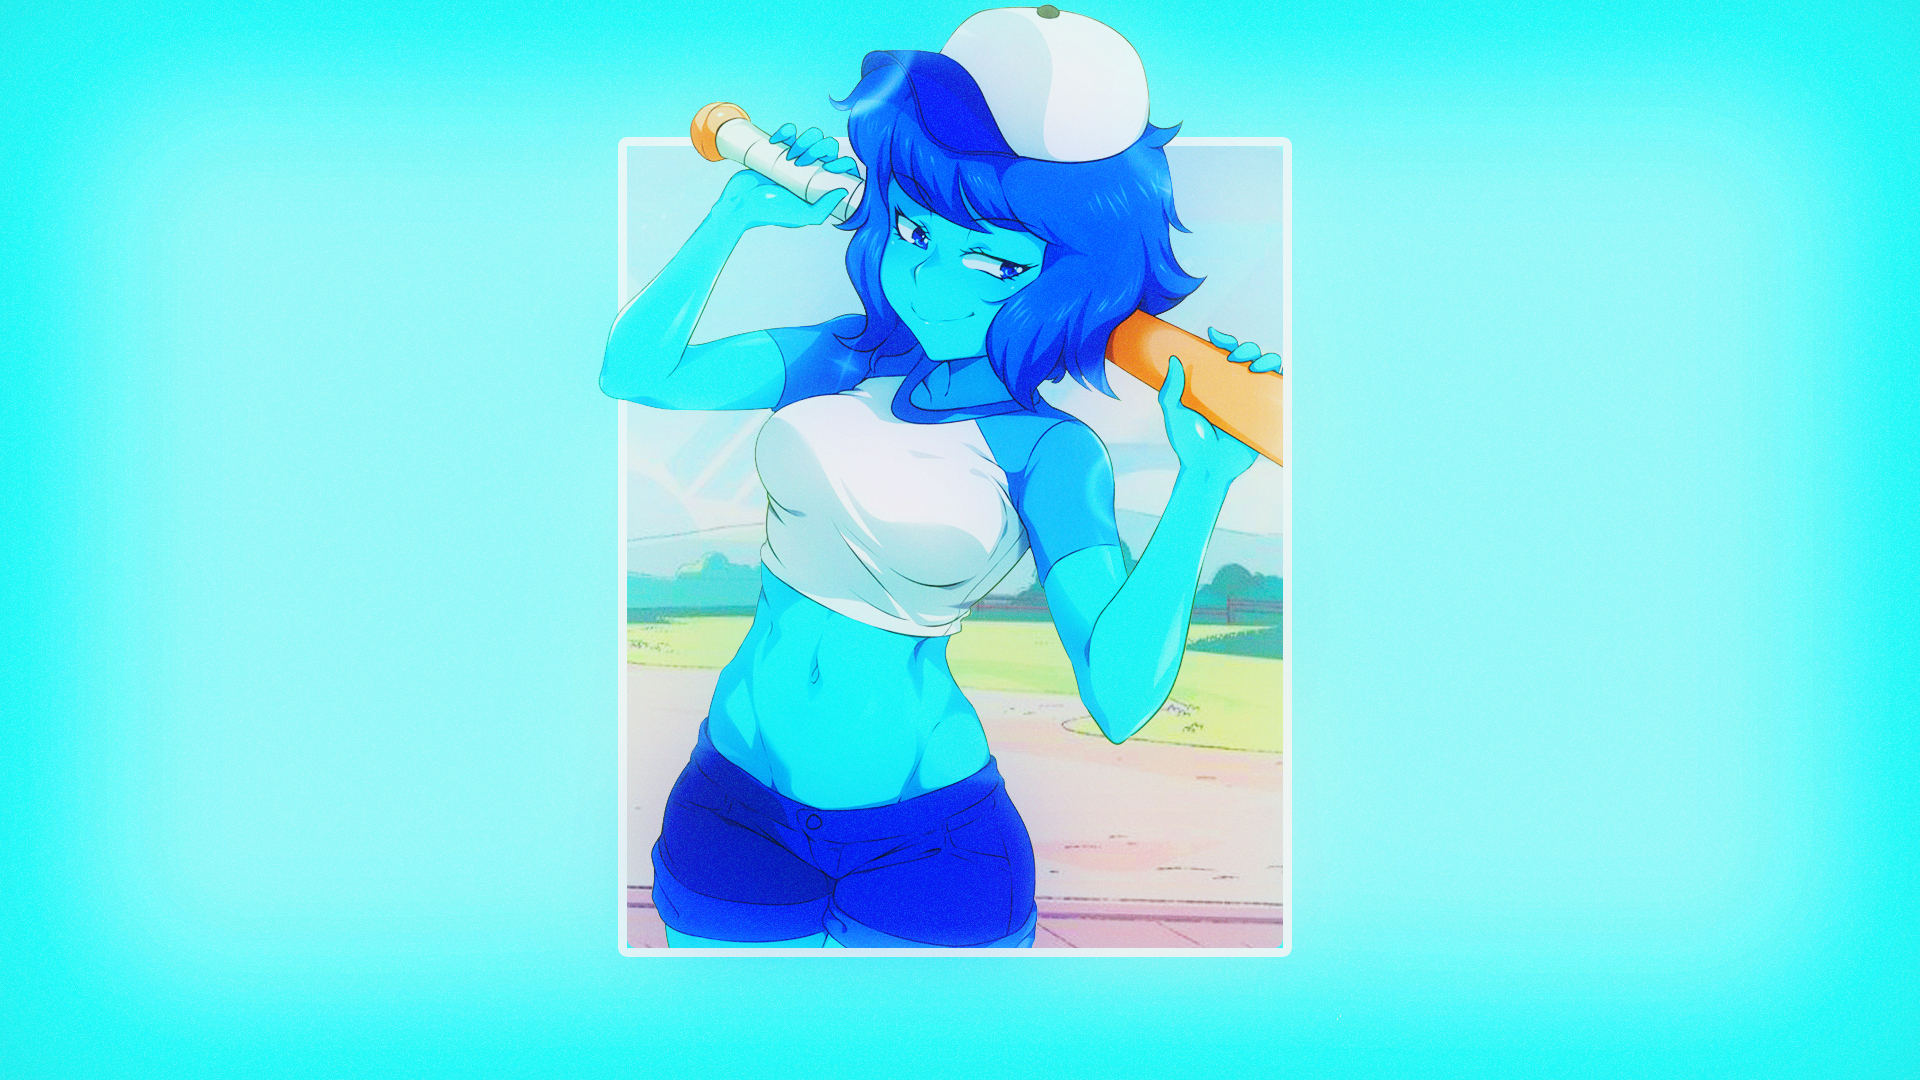 Anime 1920x1080 simple background picture-in-picture Lapis Lazuli (Steven Universe) Steven Universe blue skin hat baseball bat blue hair